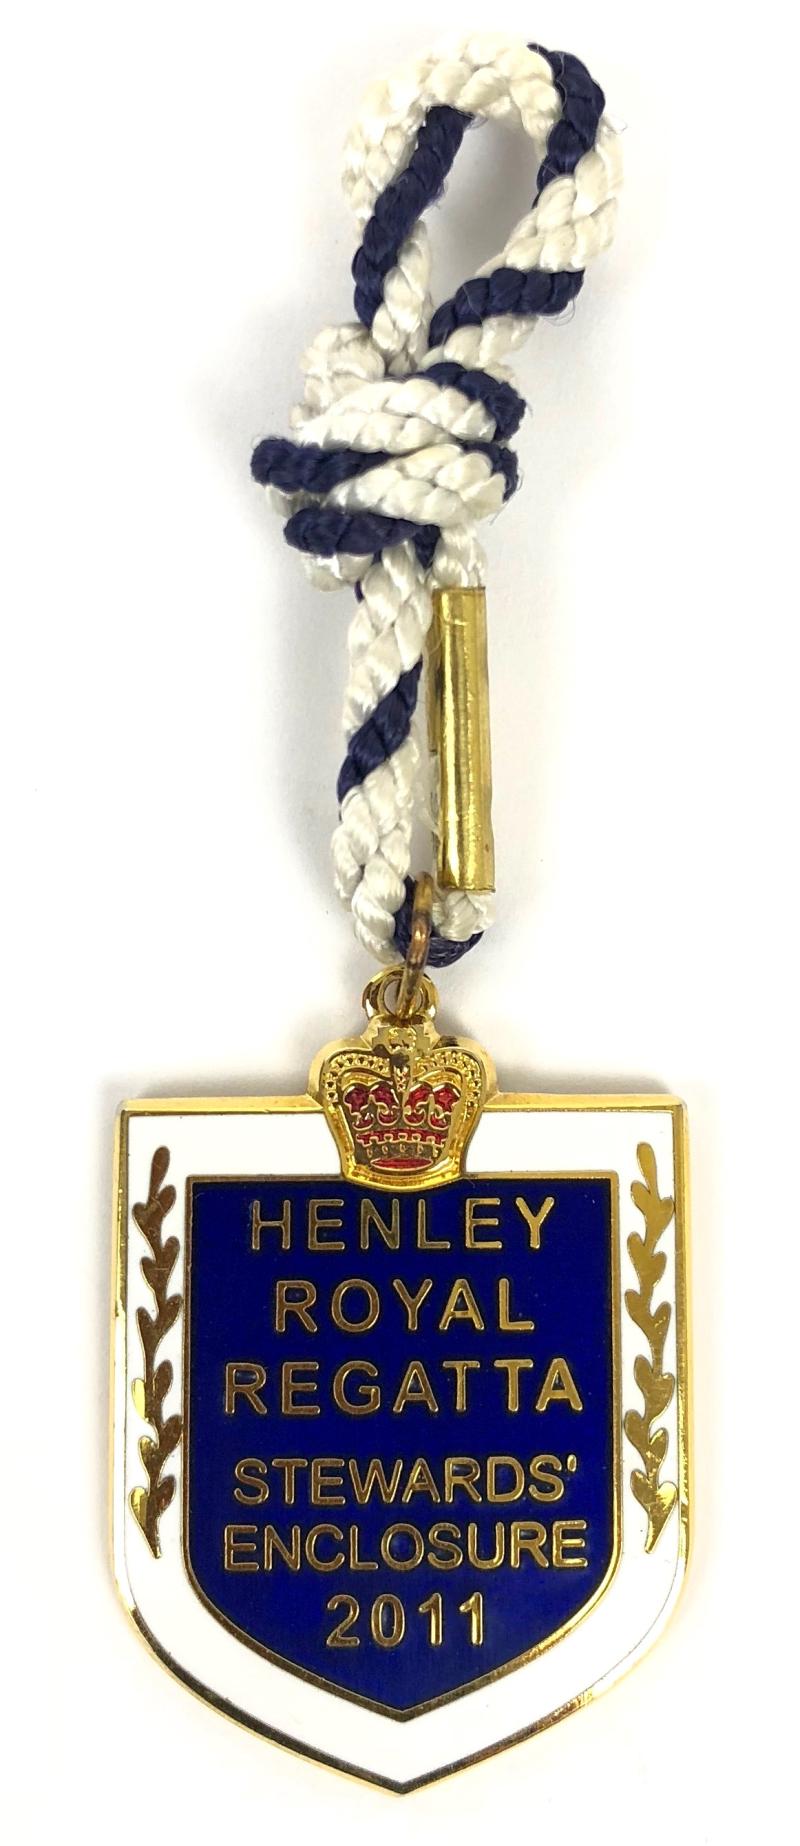 2011 Henley Royal Regatta stewards enclosure badge